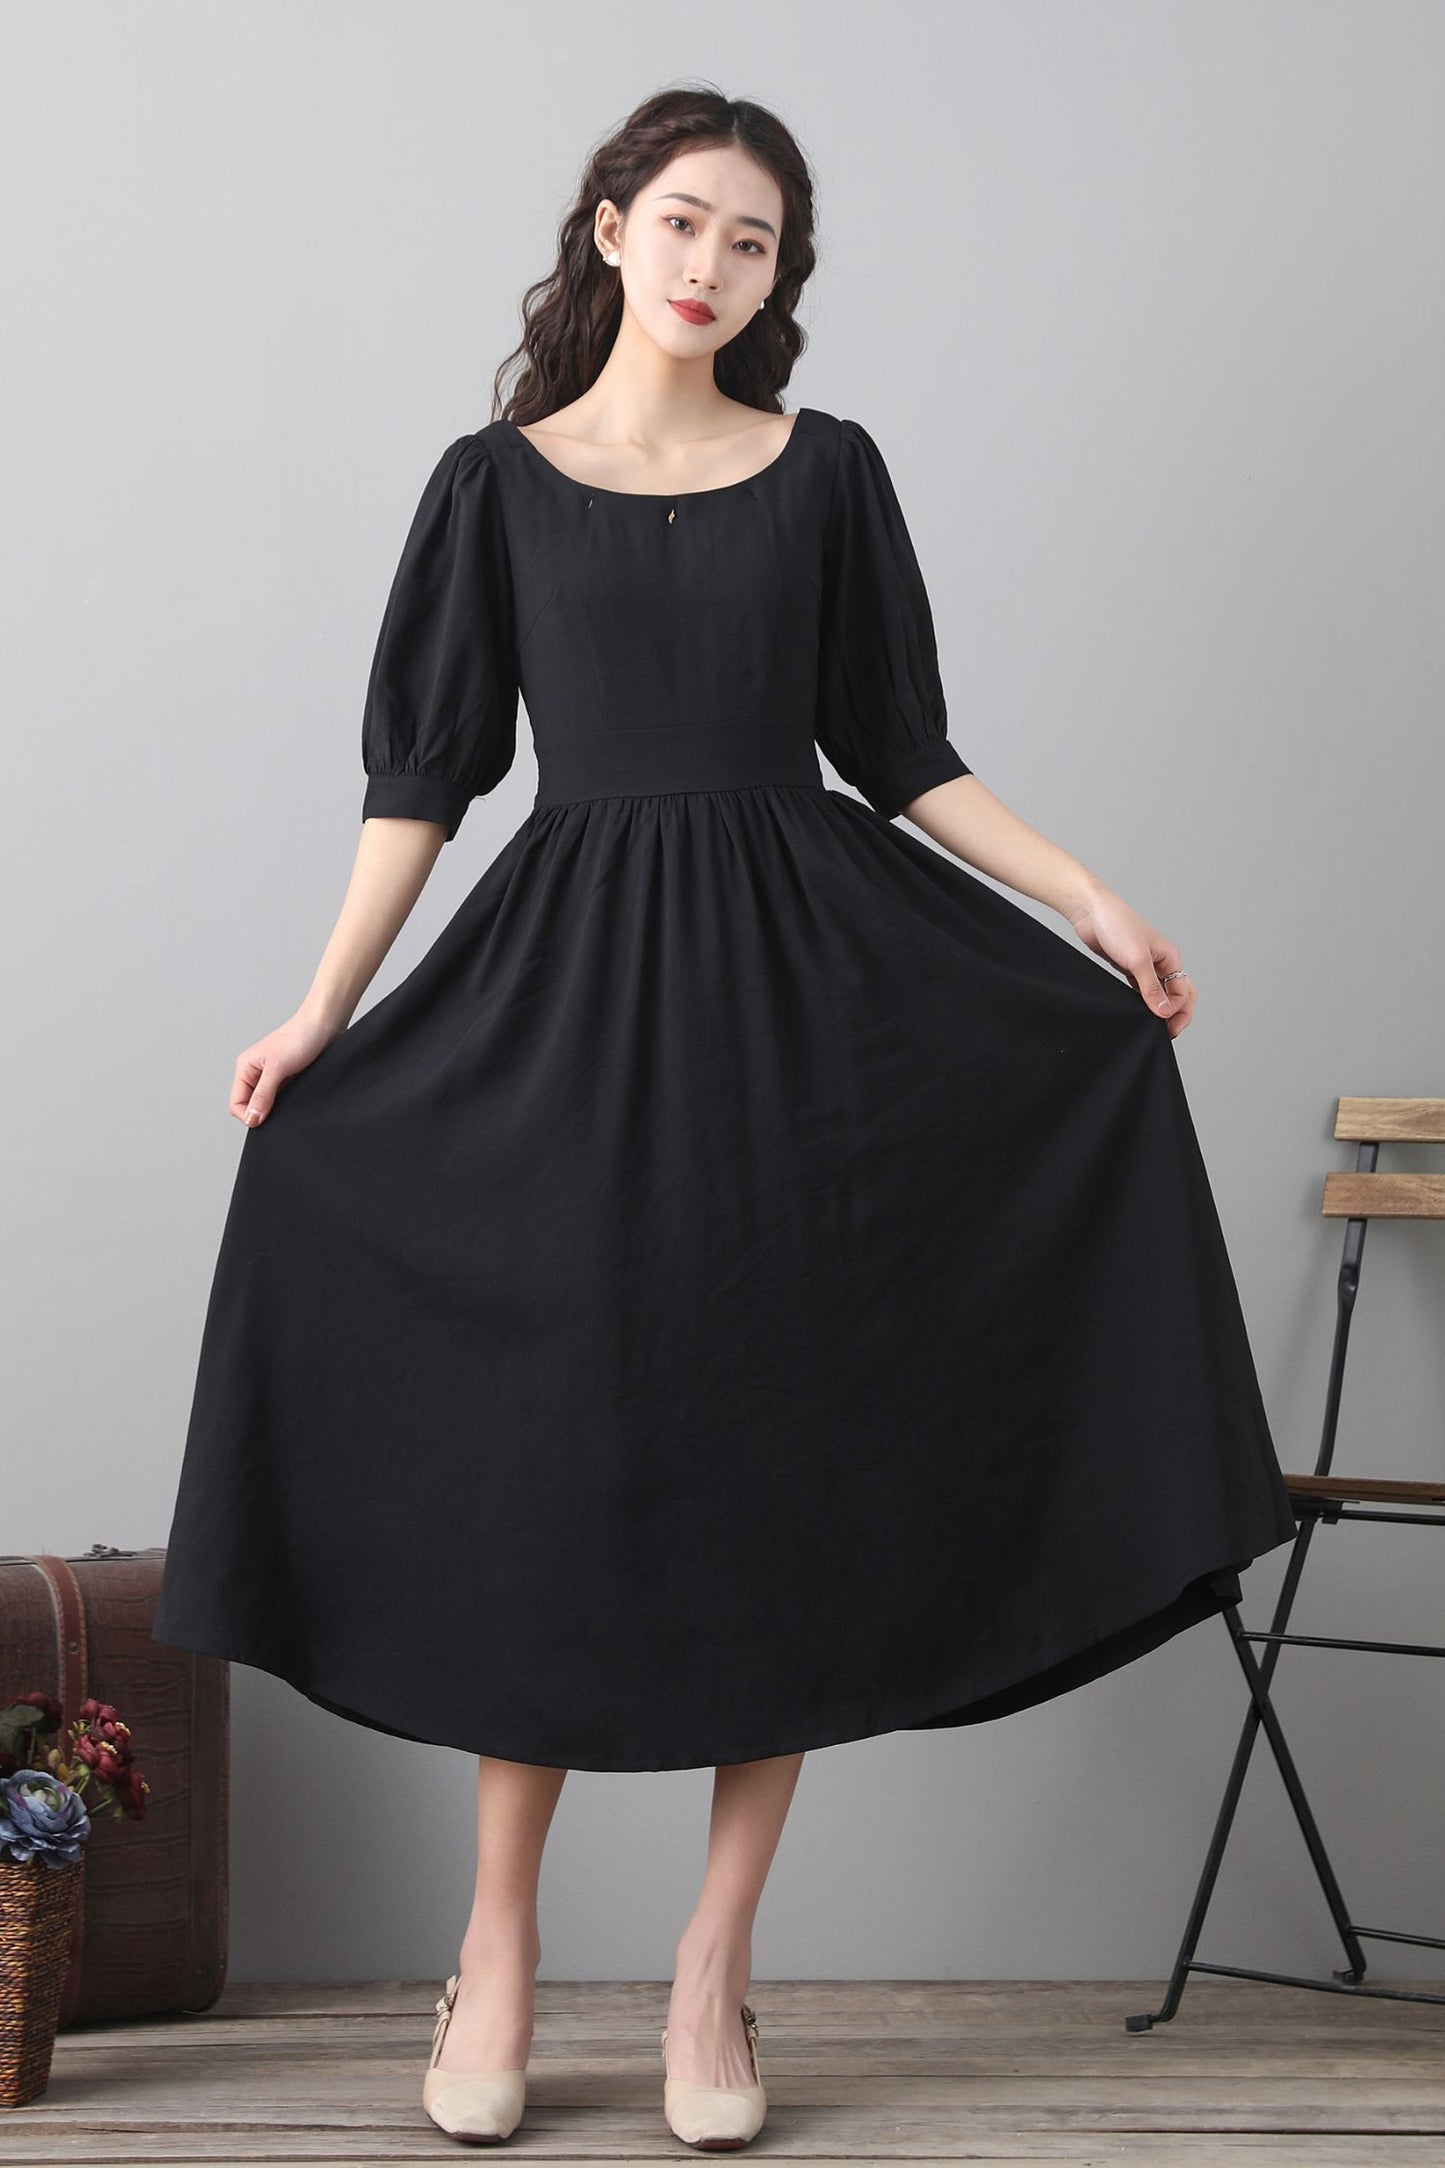 Vintage inspired cotton linen dress 2559